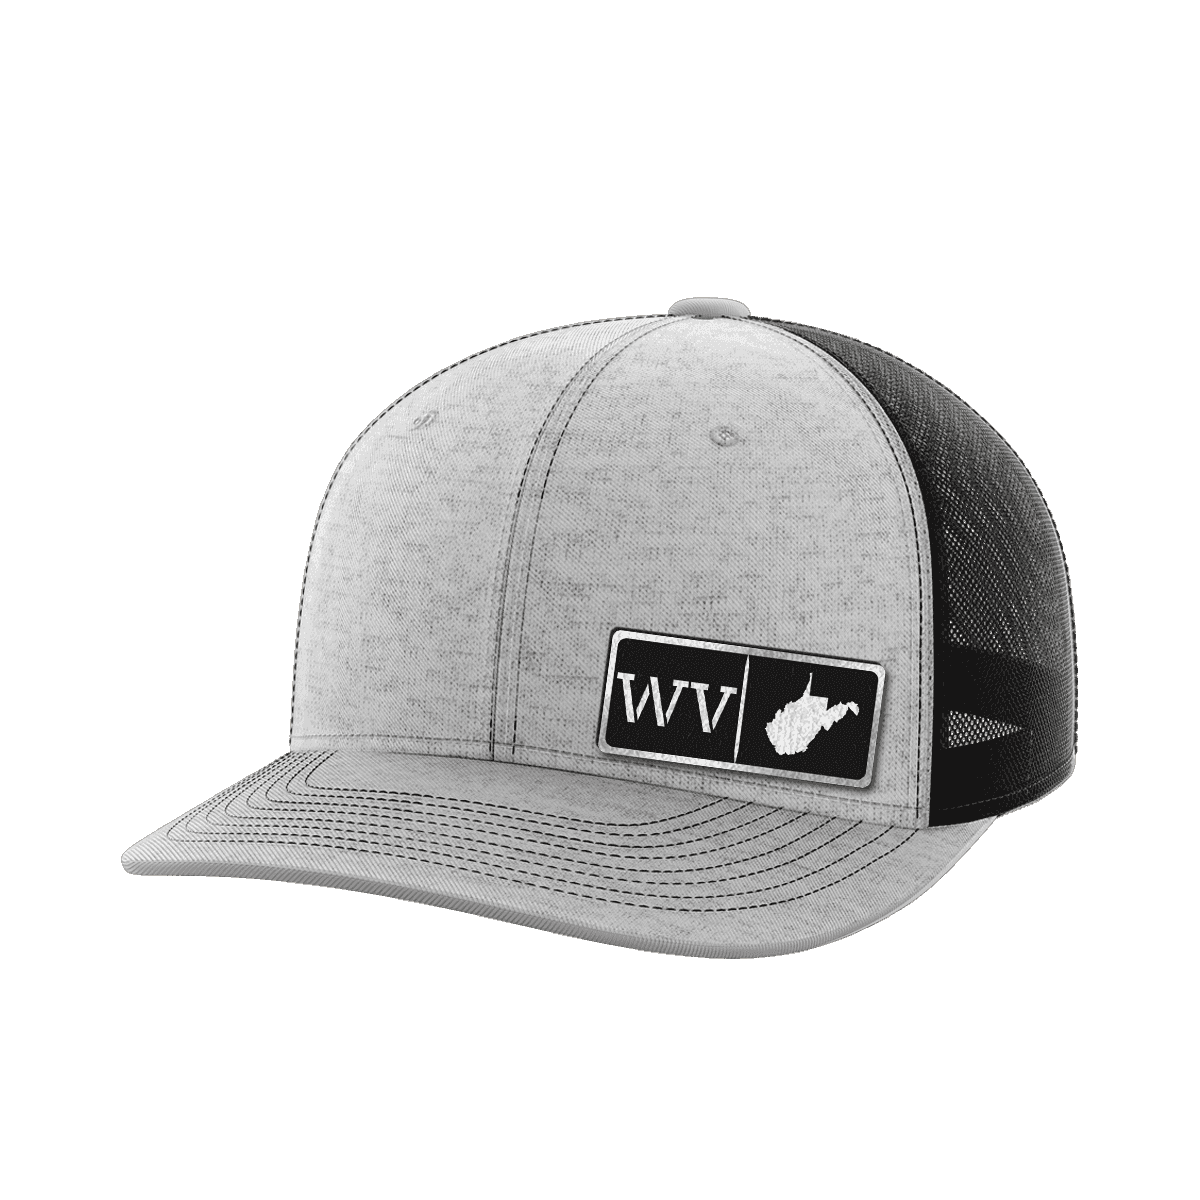 West Virginia Homegrown Hats - Greater Half